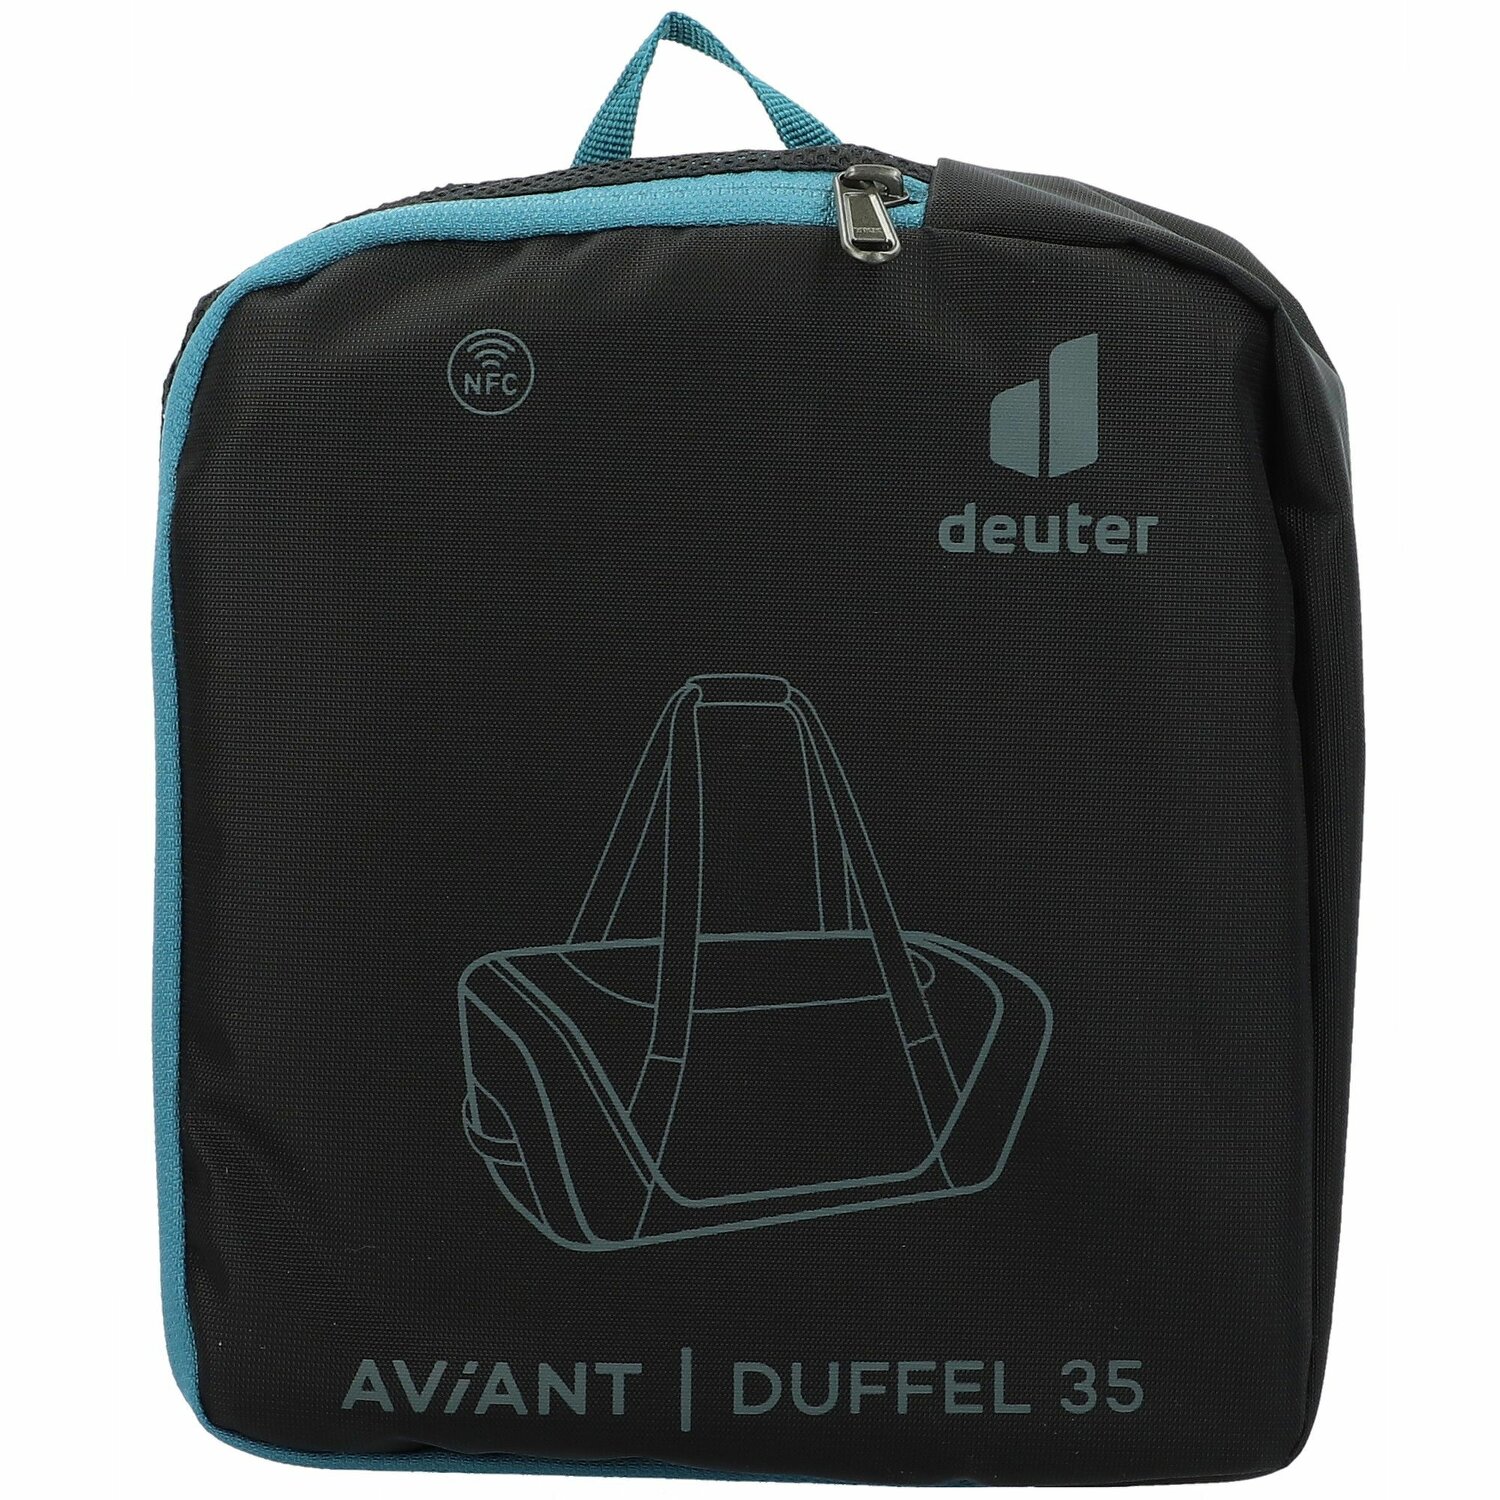 Duffel 35 | Weekender Aviant bei Deuter Reisetasche black cm 50